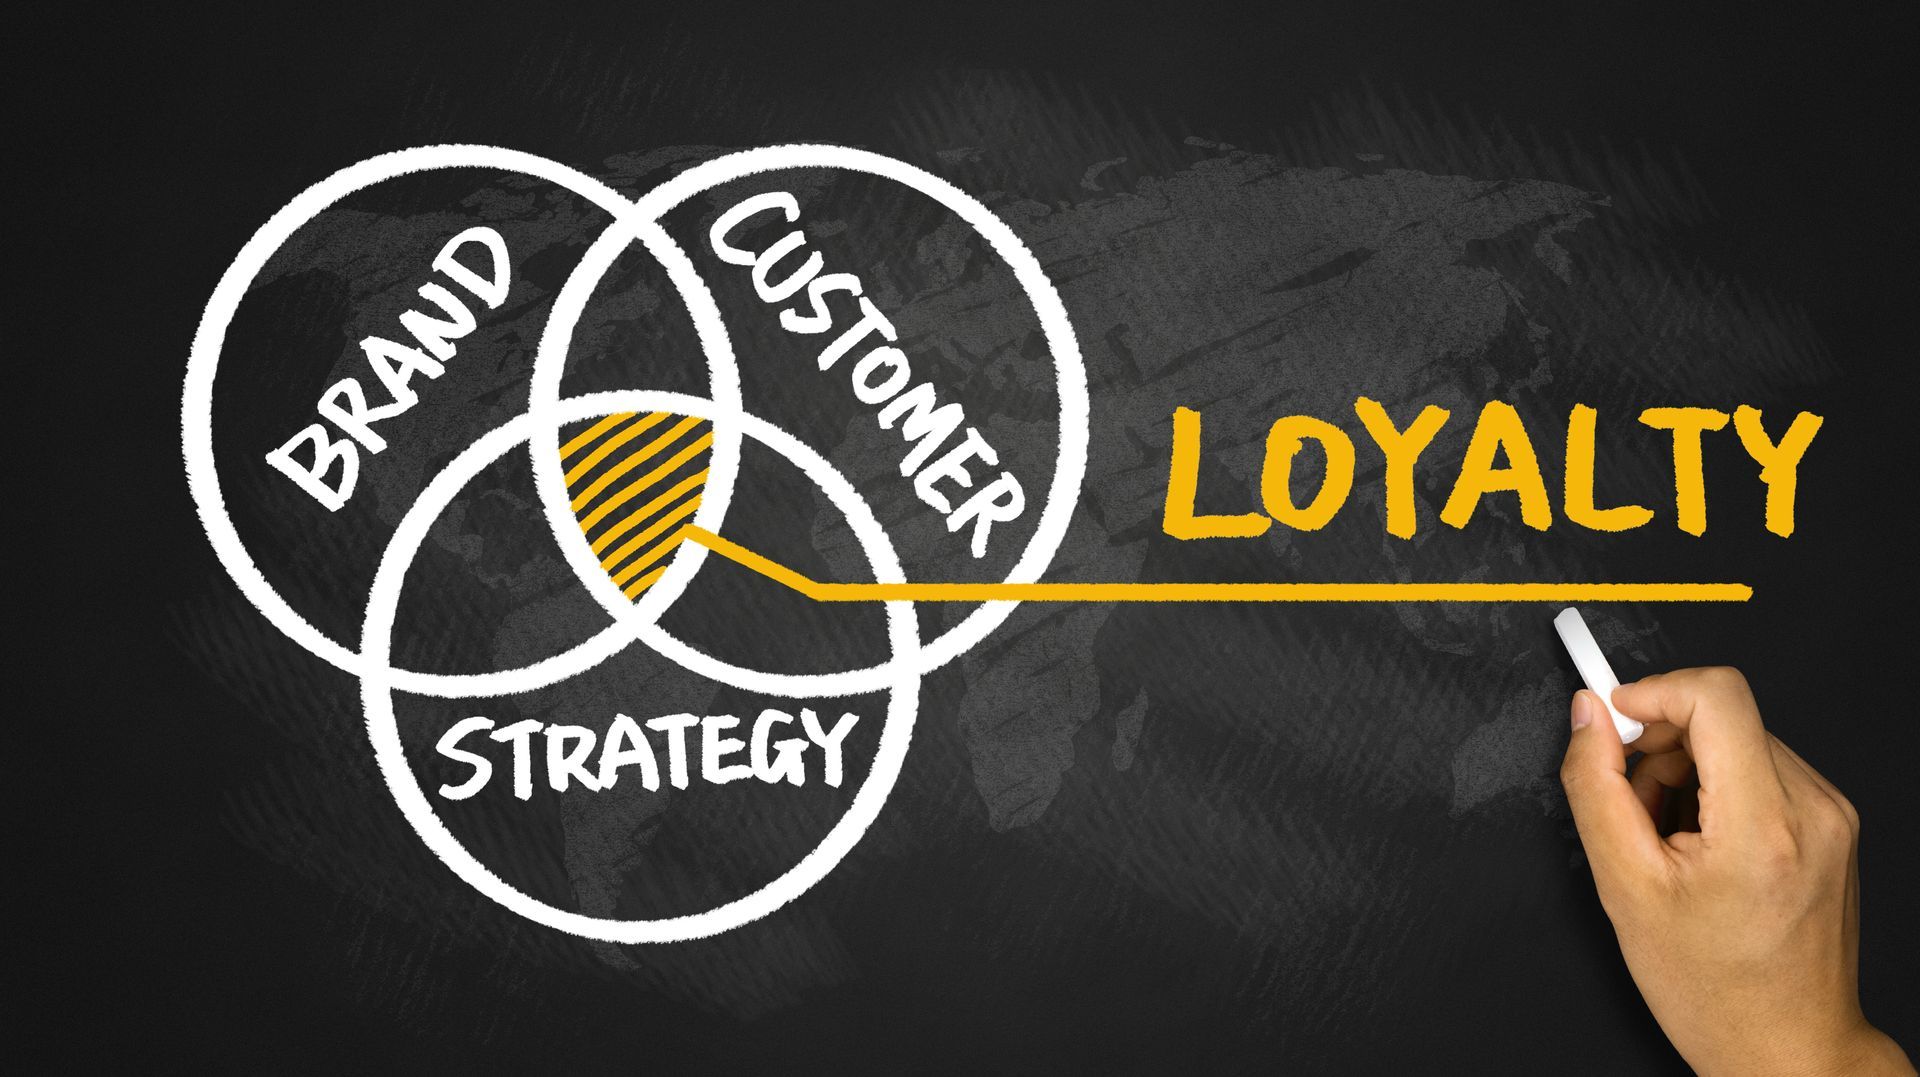 Having strategy can increase customer loyalty